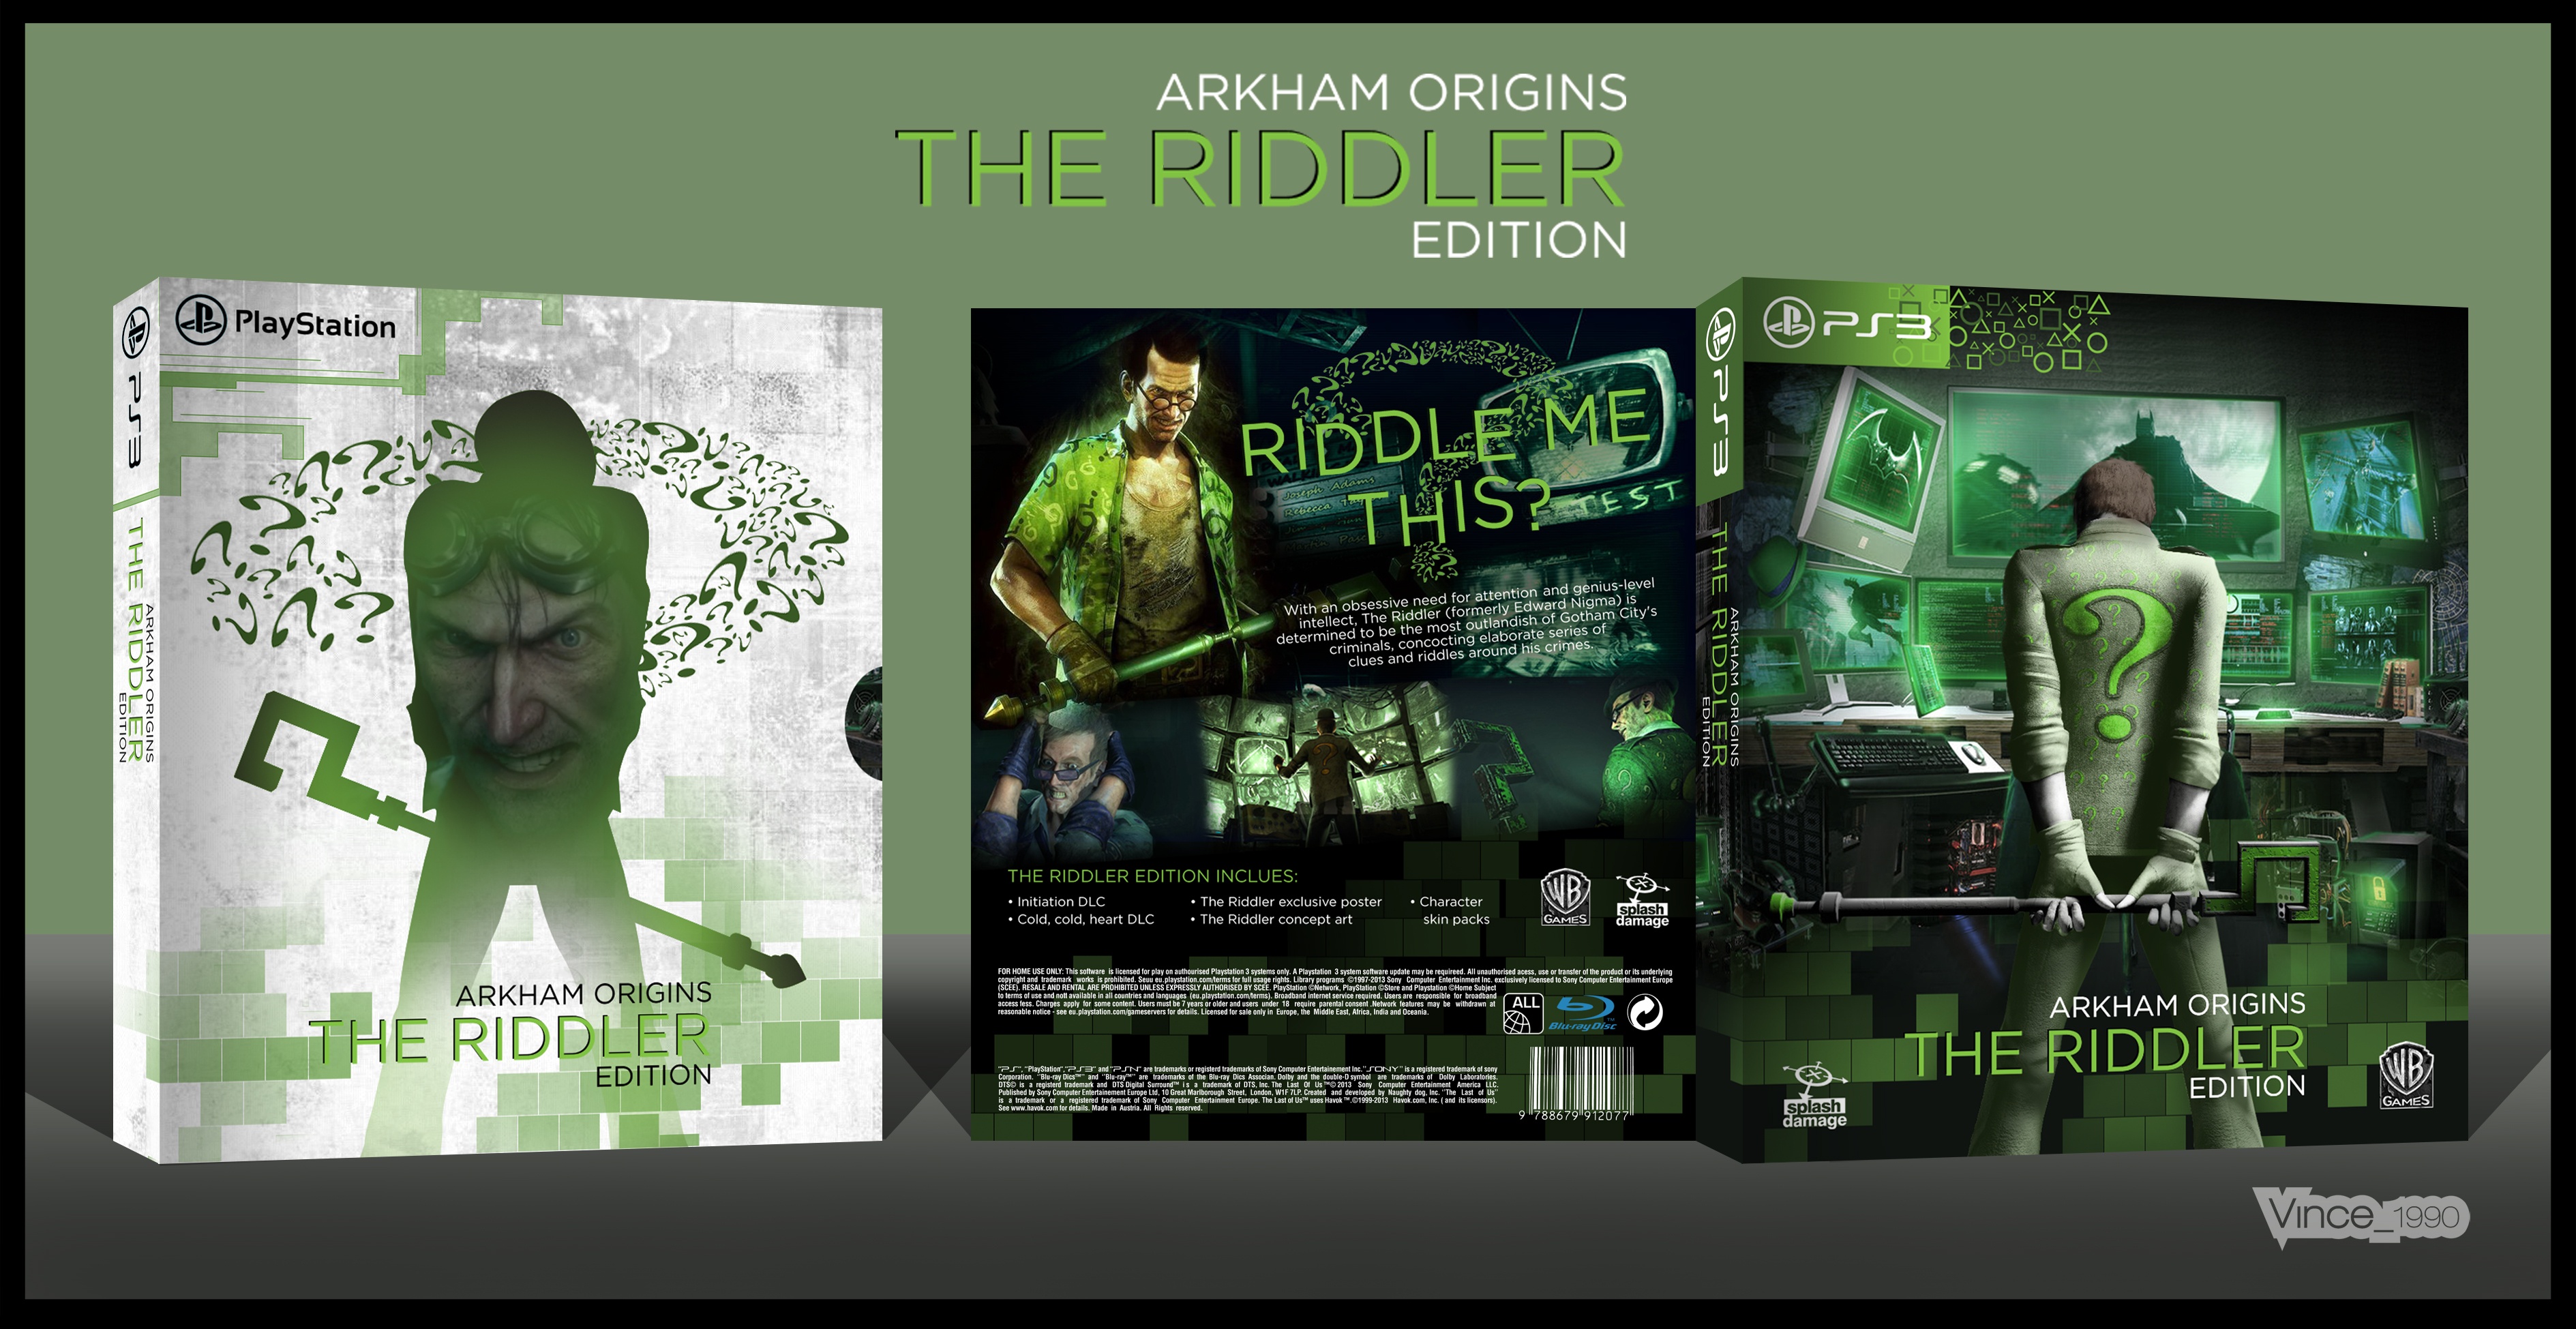 Batman: Arkham Origins - The Riddler Edition box cover